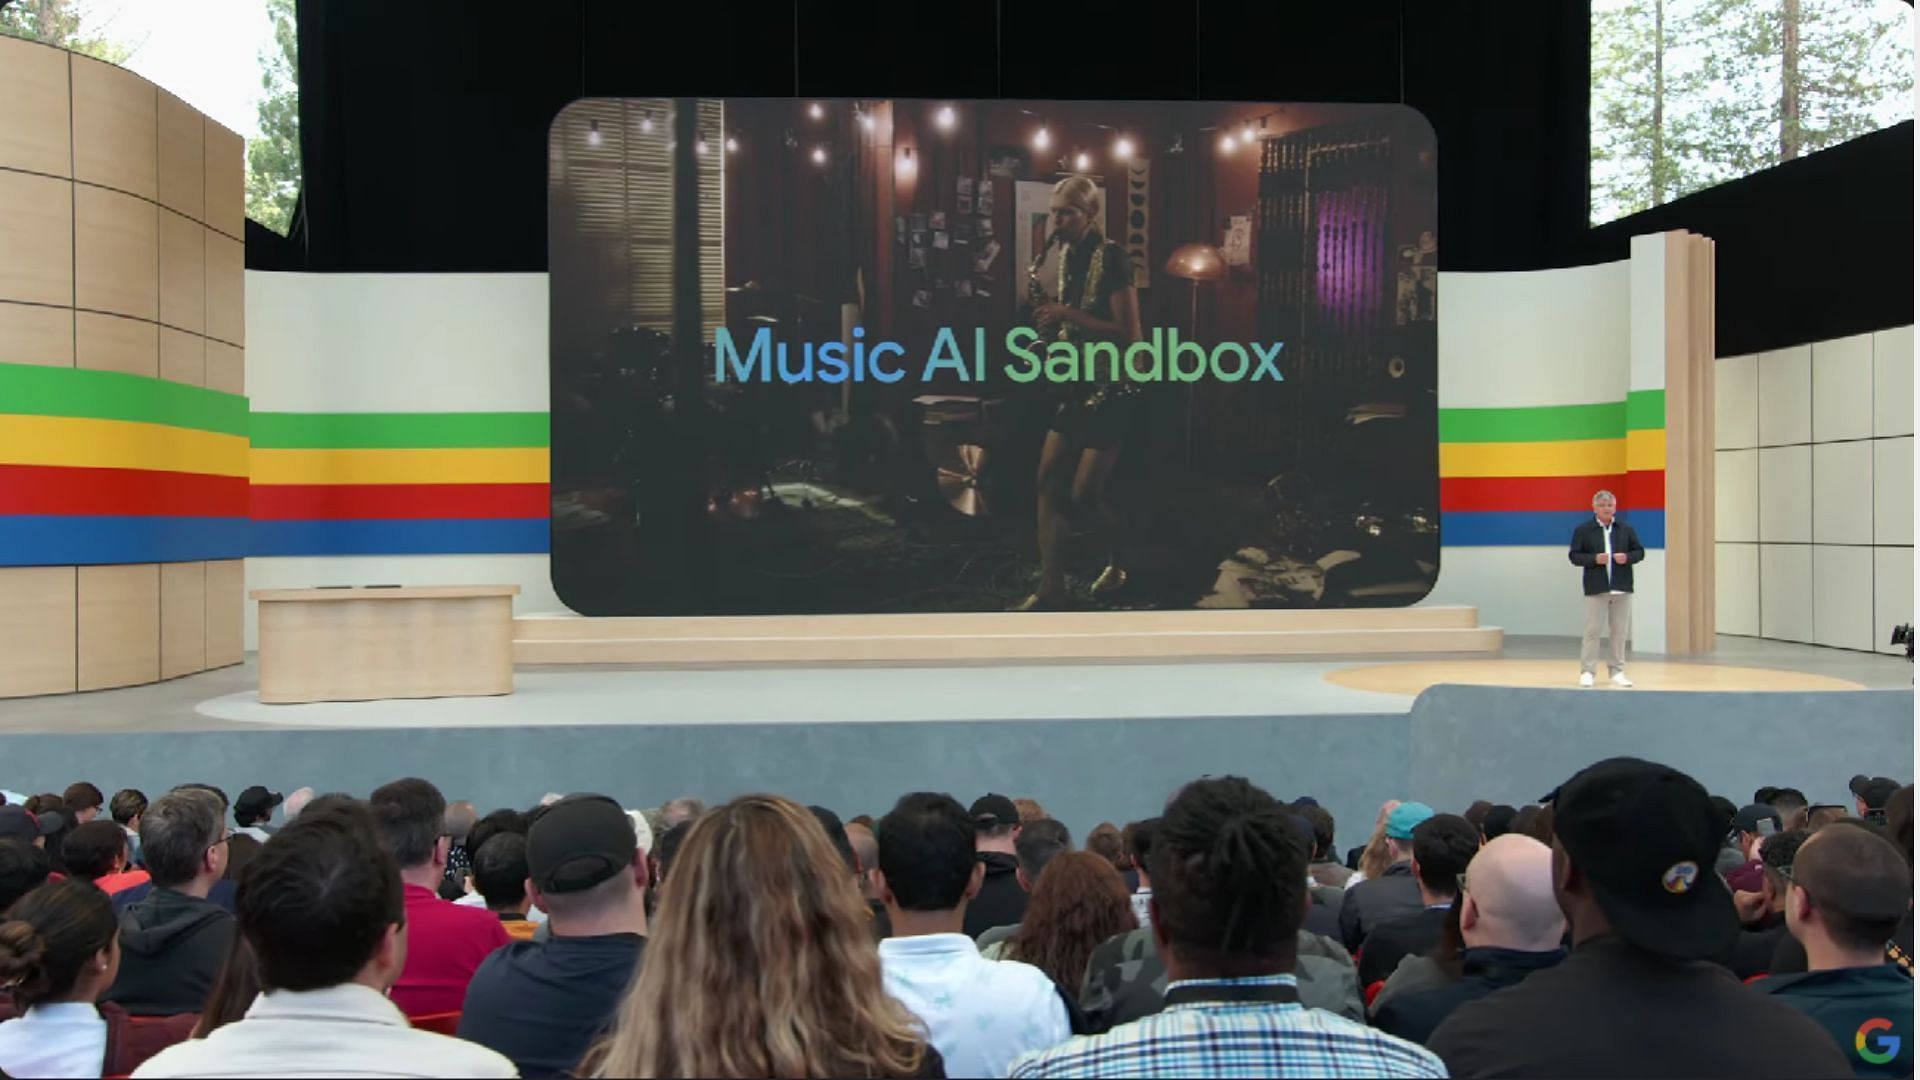 Music AI Sandbox announced at the new Google Event (Image via Google)